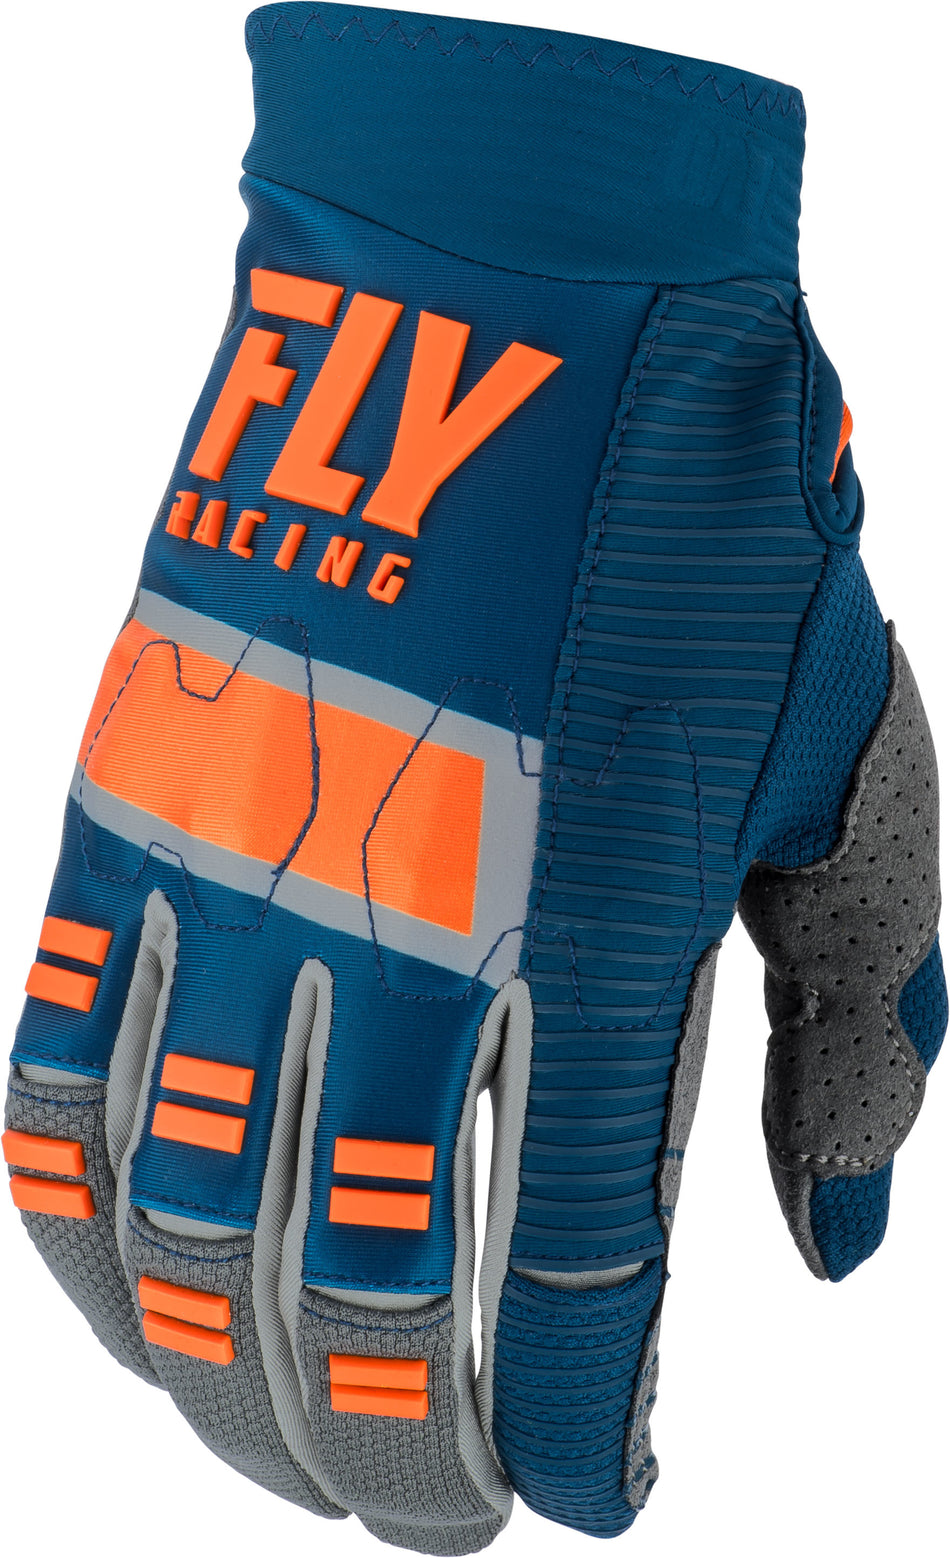 FLY RACING Evolution Dst Gloves Navy/Grey/Orange Sz 11 372-11111